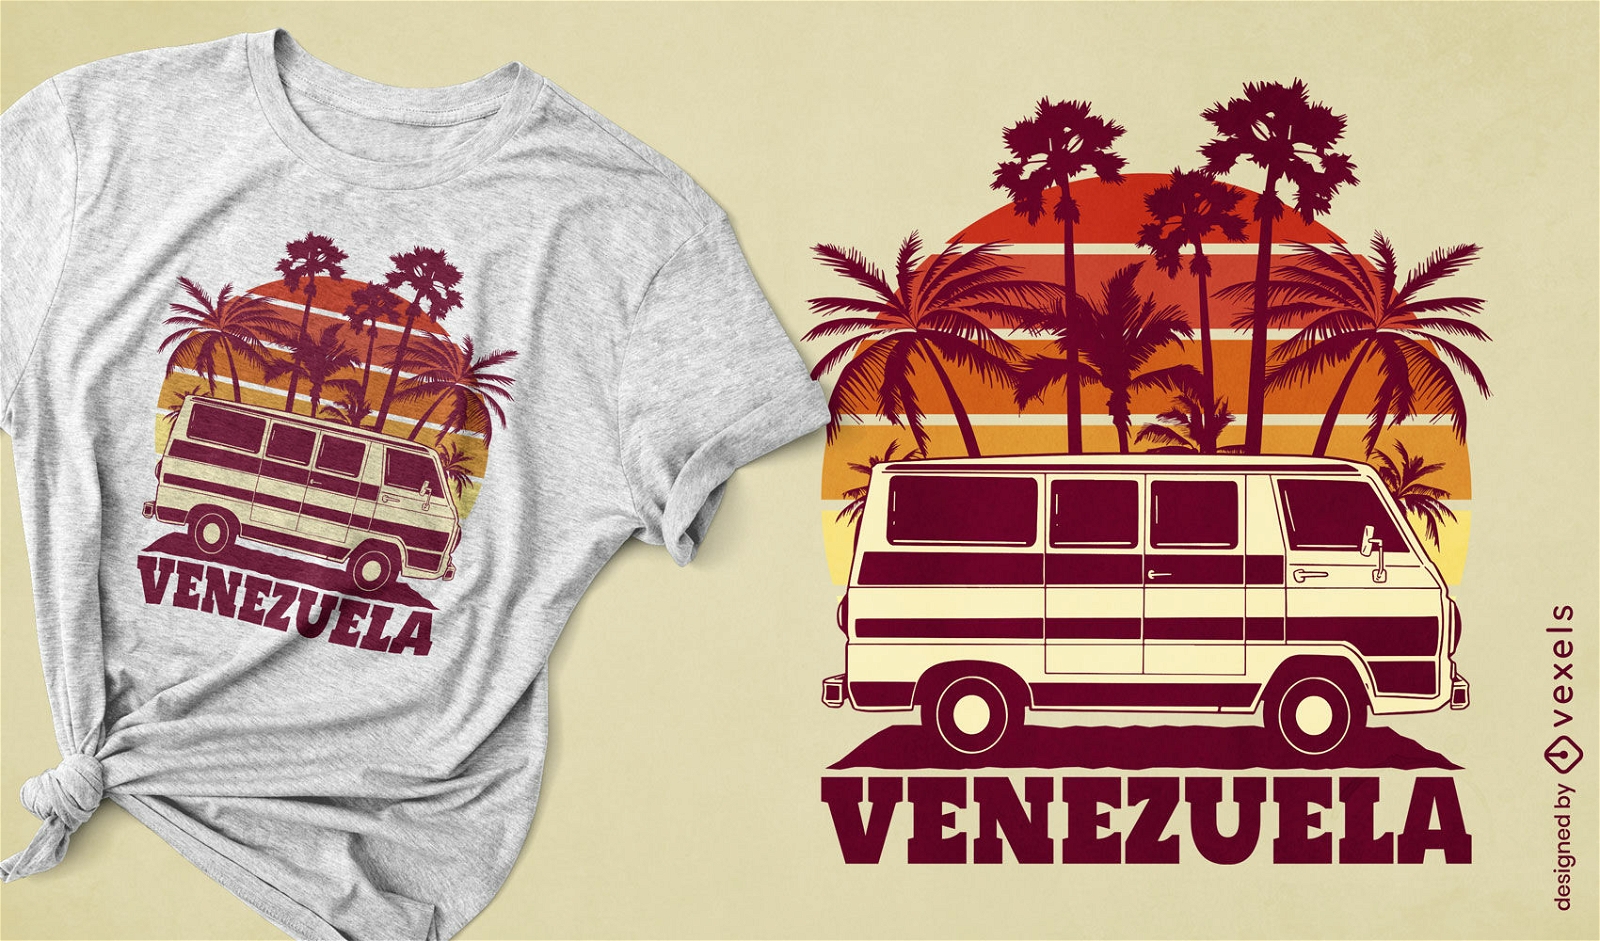 Venezuela van t-shirt design